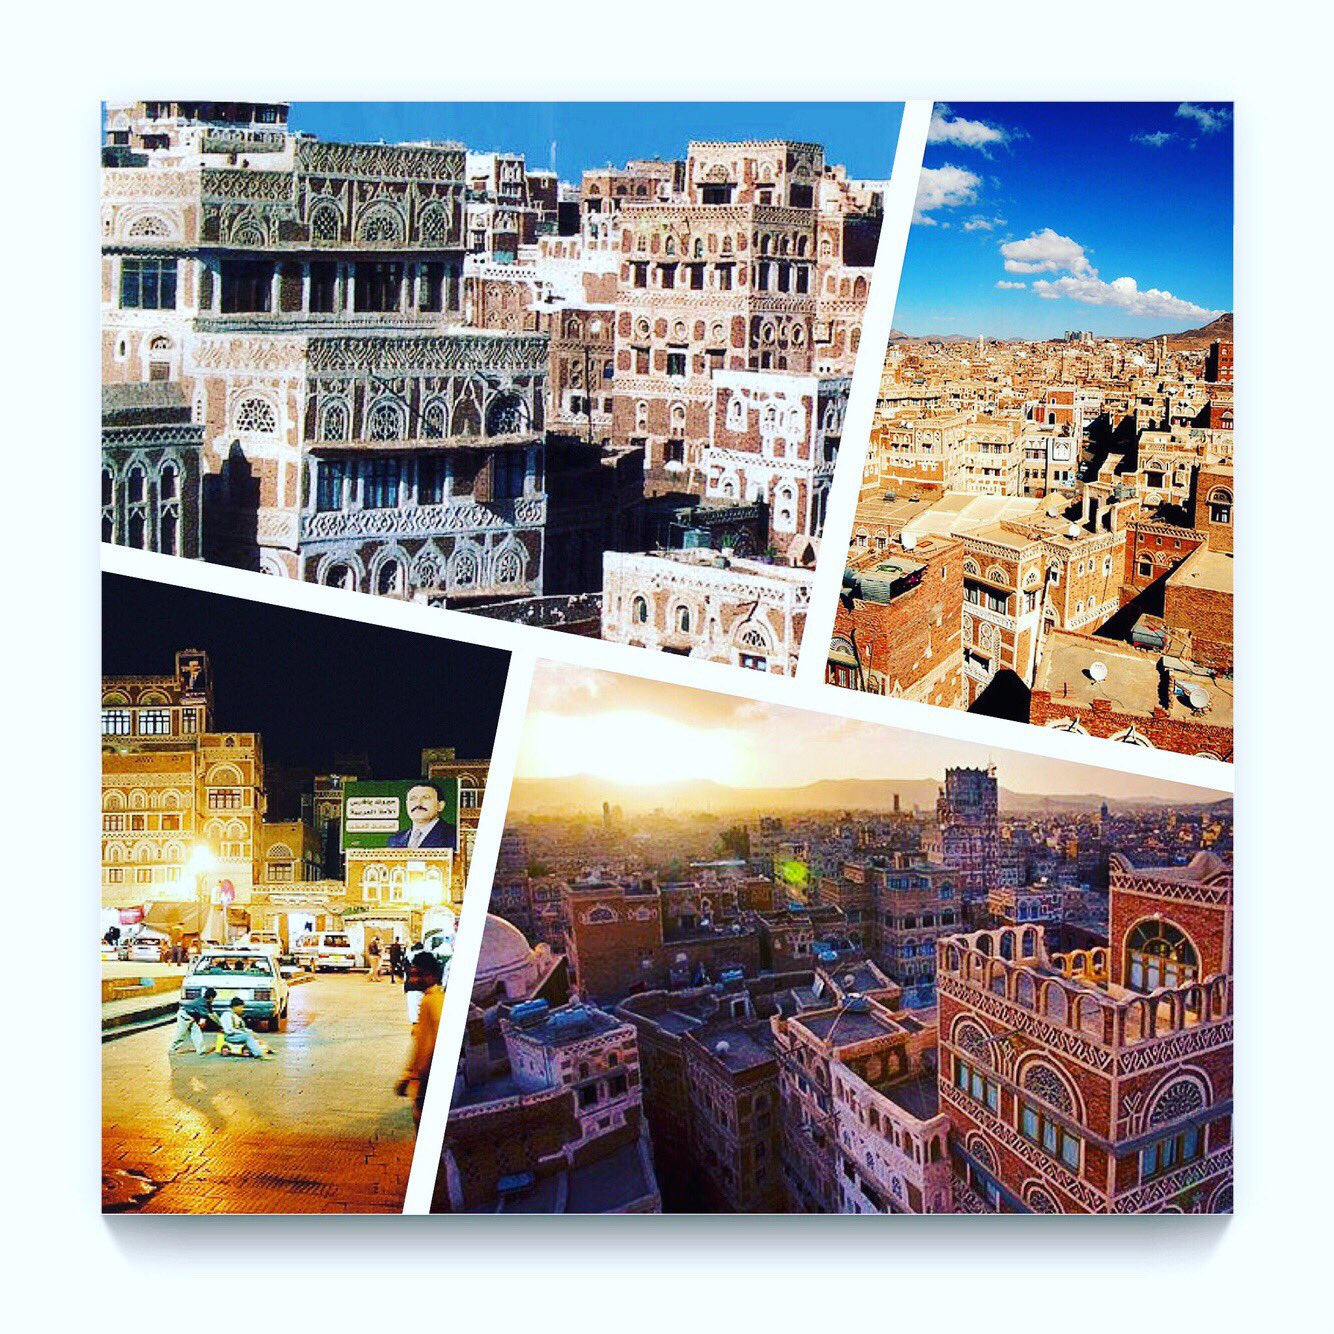 تويتر Manami Sasaki على تويتر サナア旧市街 文化遺産 イエメン共和国 世界最古の都市の１つ 現在のイエメンの首都 有名なノアの方舟物語に登場する ノアの息子が建設した という逸話も 世界遺産 世界絶景 T Co Pl2abypyns